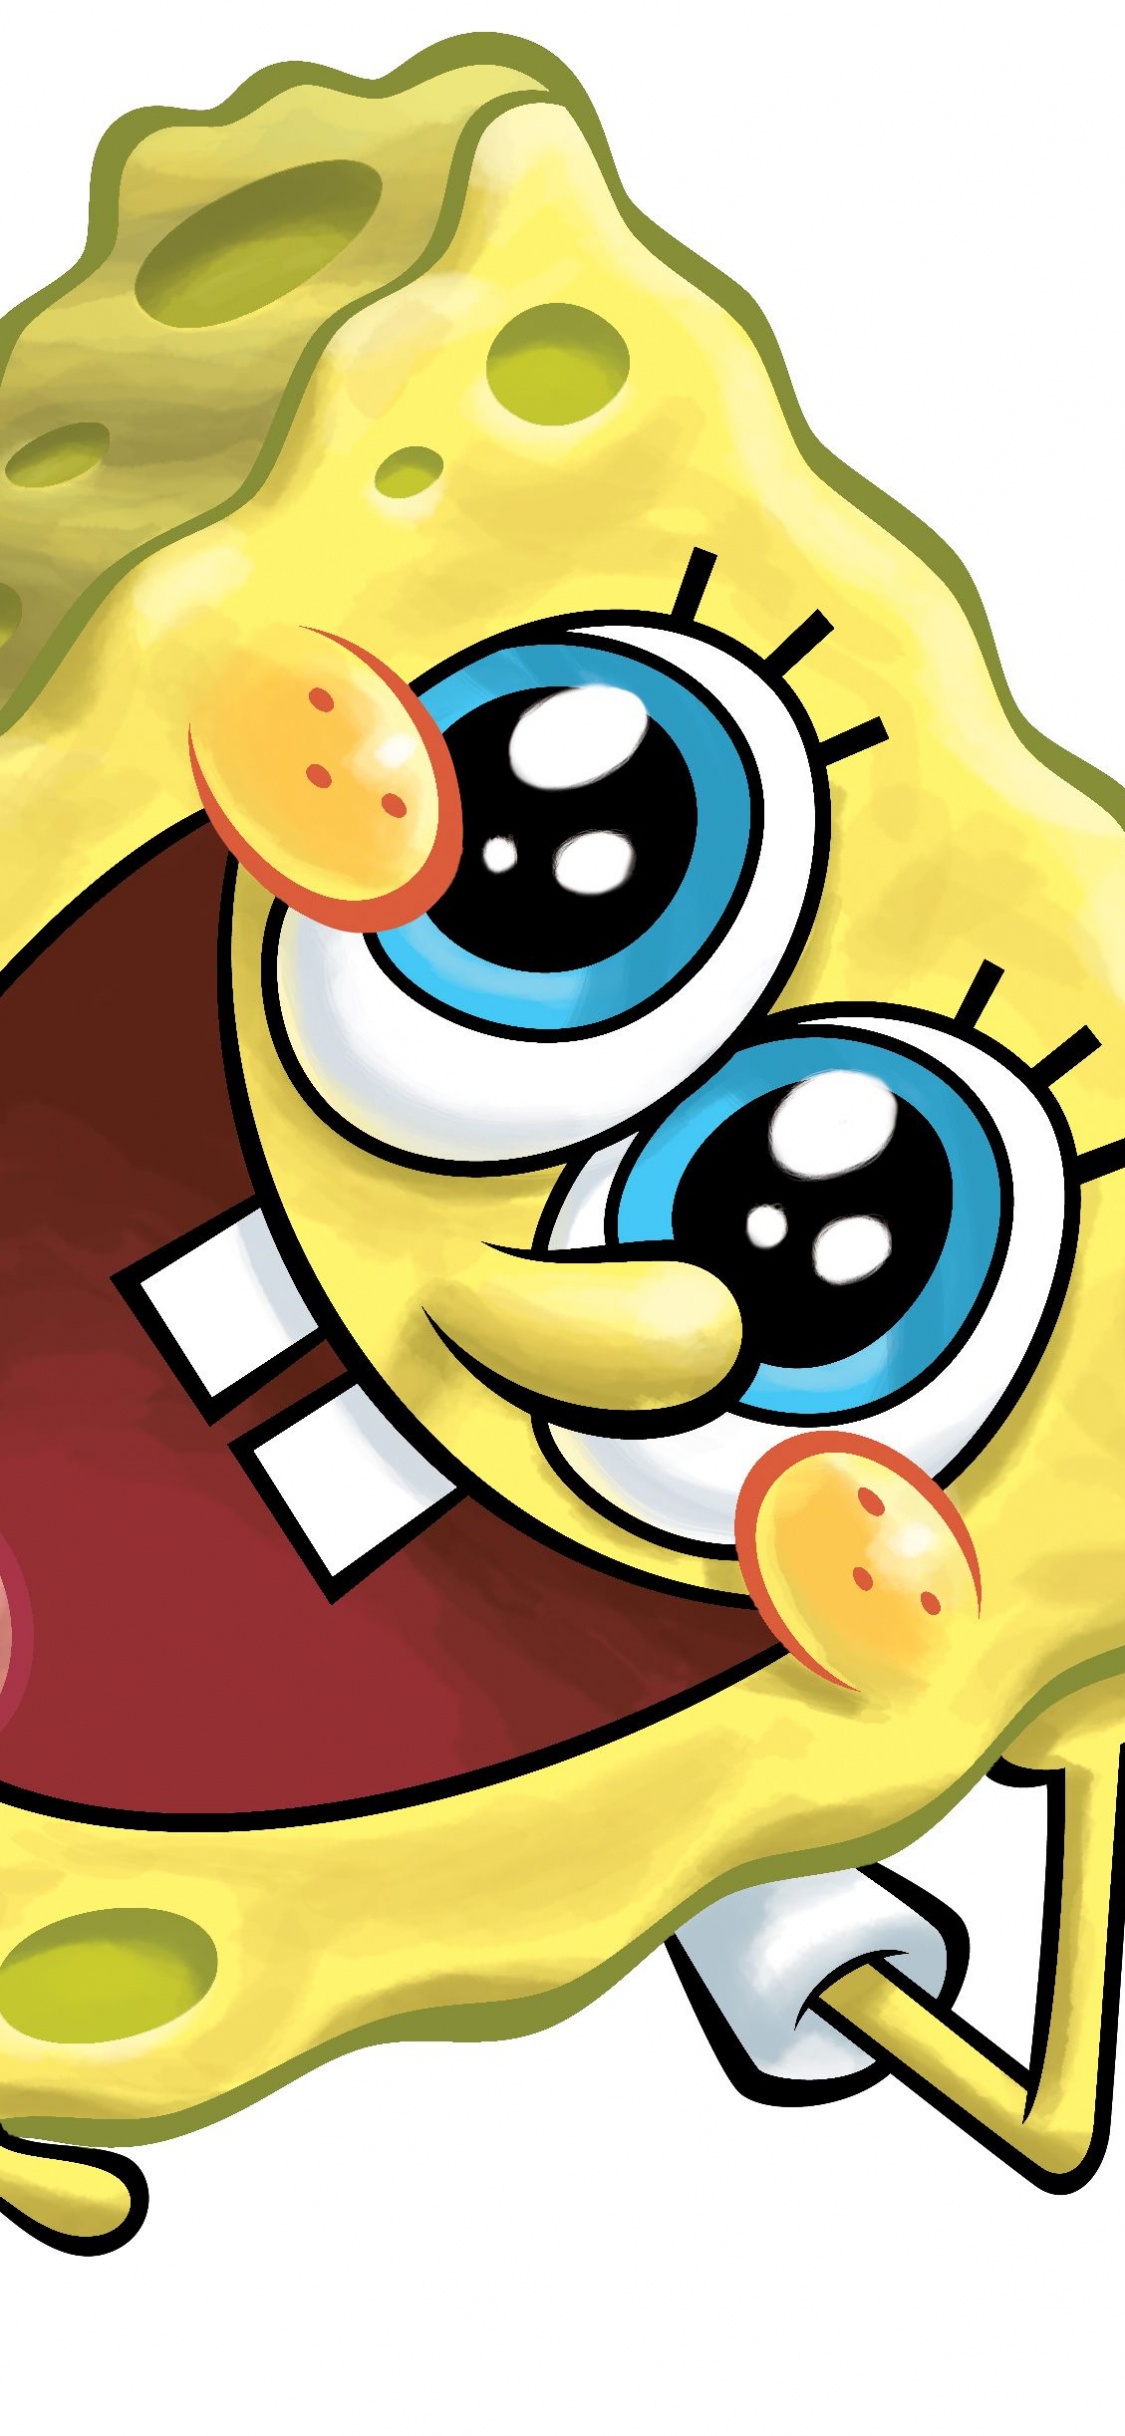 Spongebob Squarepants Holding a Key. Wallpaper in 1125x2436 Resolution